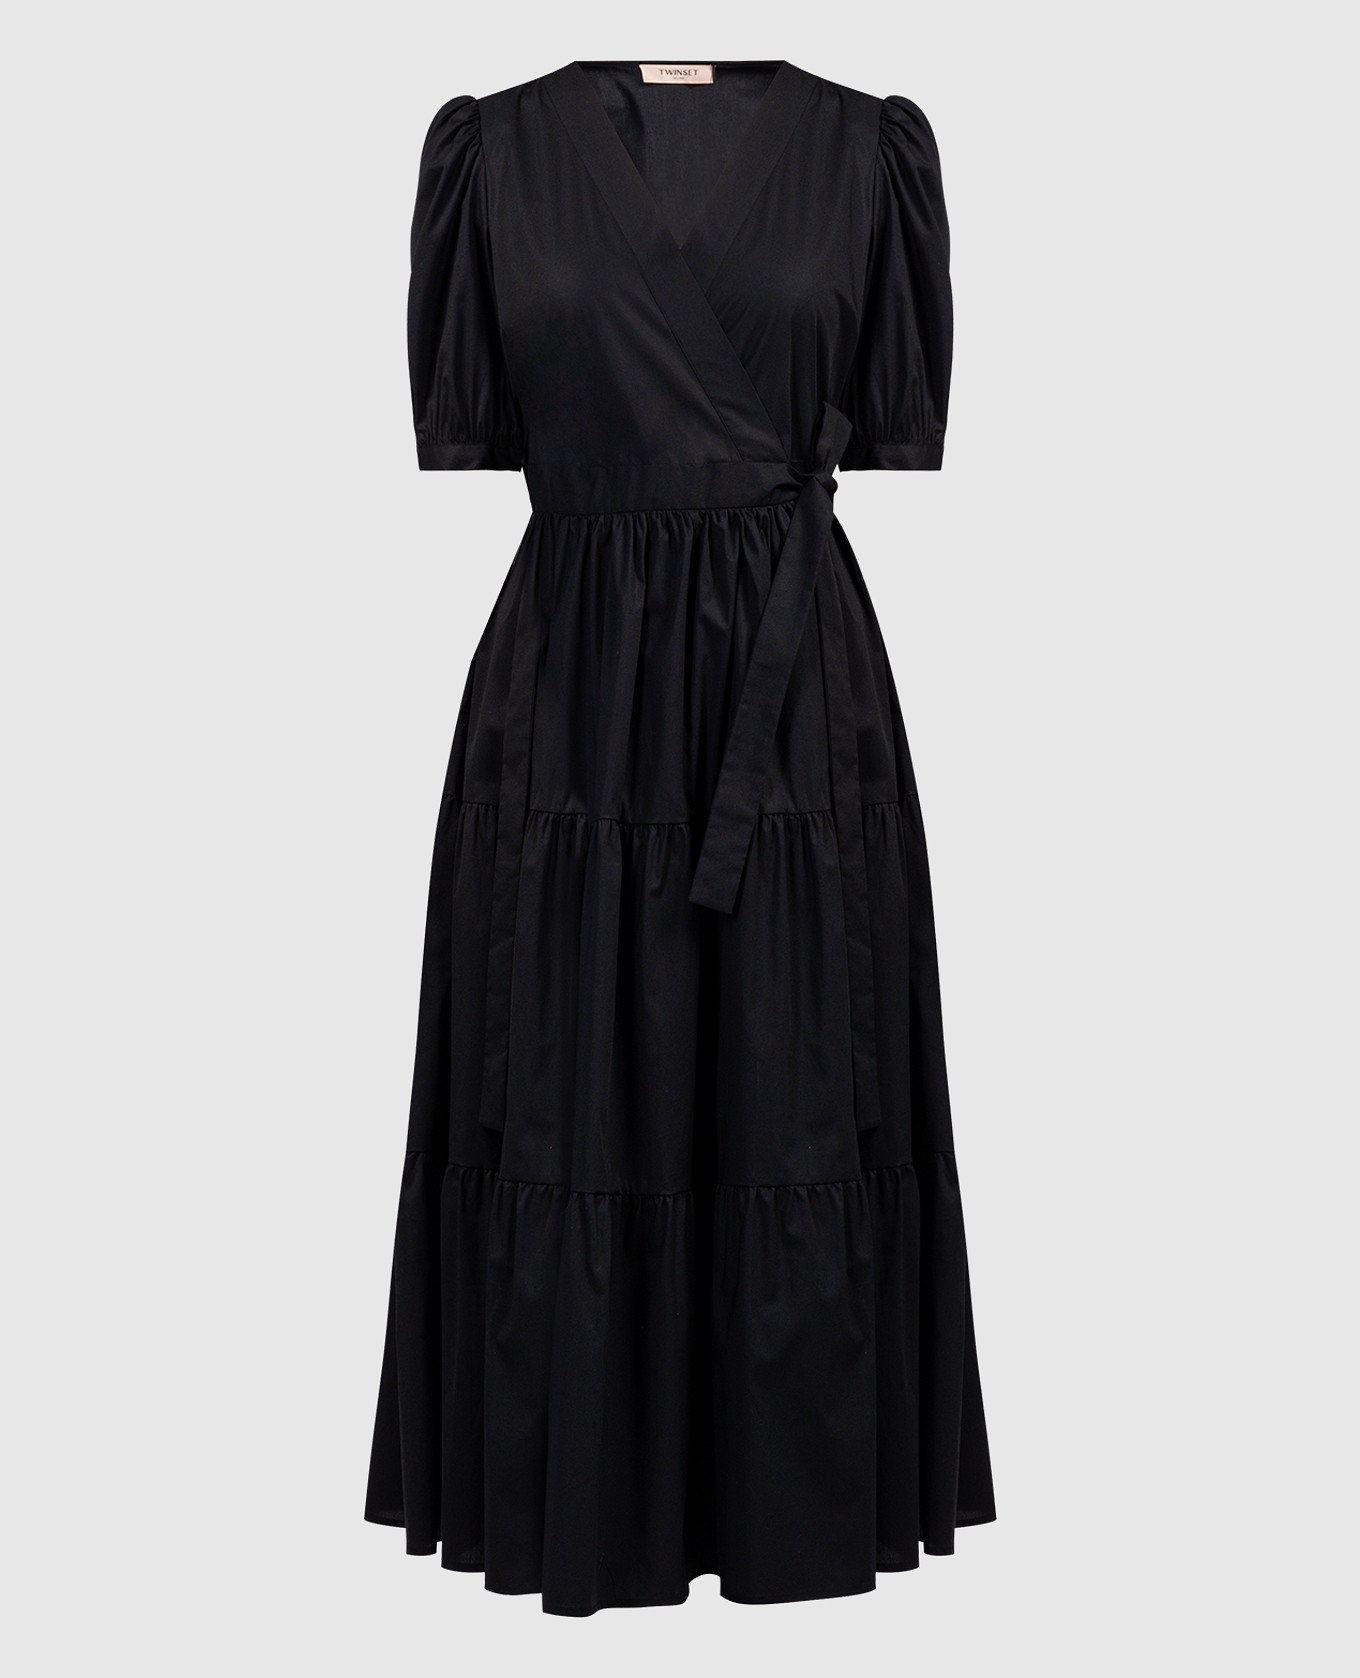 Black dress with drape and metal logo